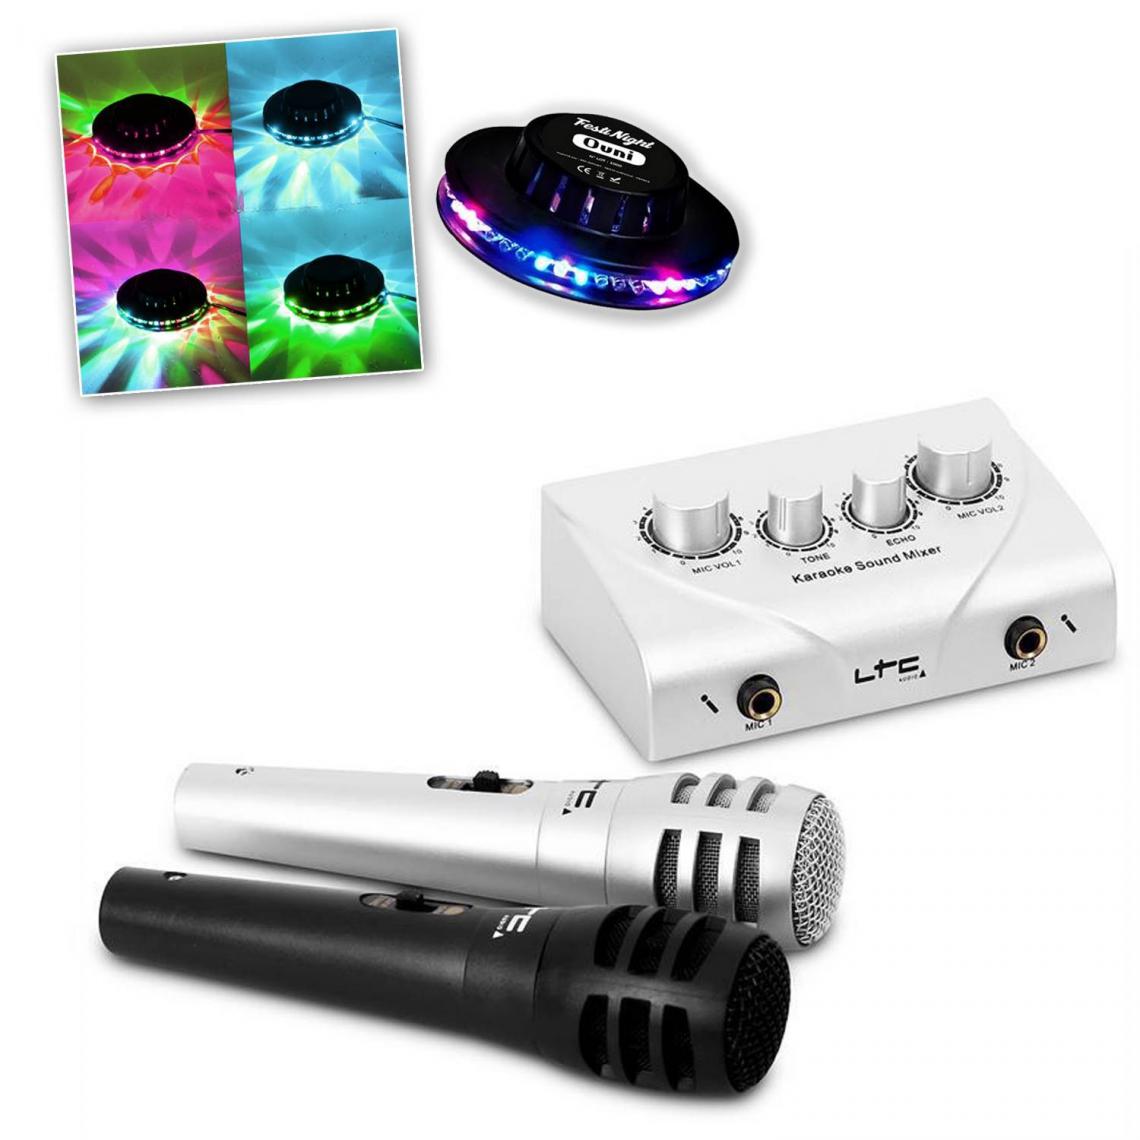 Ltc Audio - Système Karaoké Plug & Play avec 2 micros KSM-10 + Effet UFO OVNI à LED - Enceintes Hifi